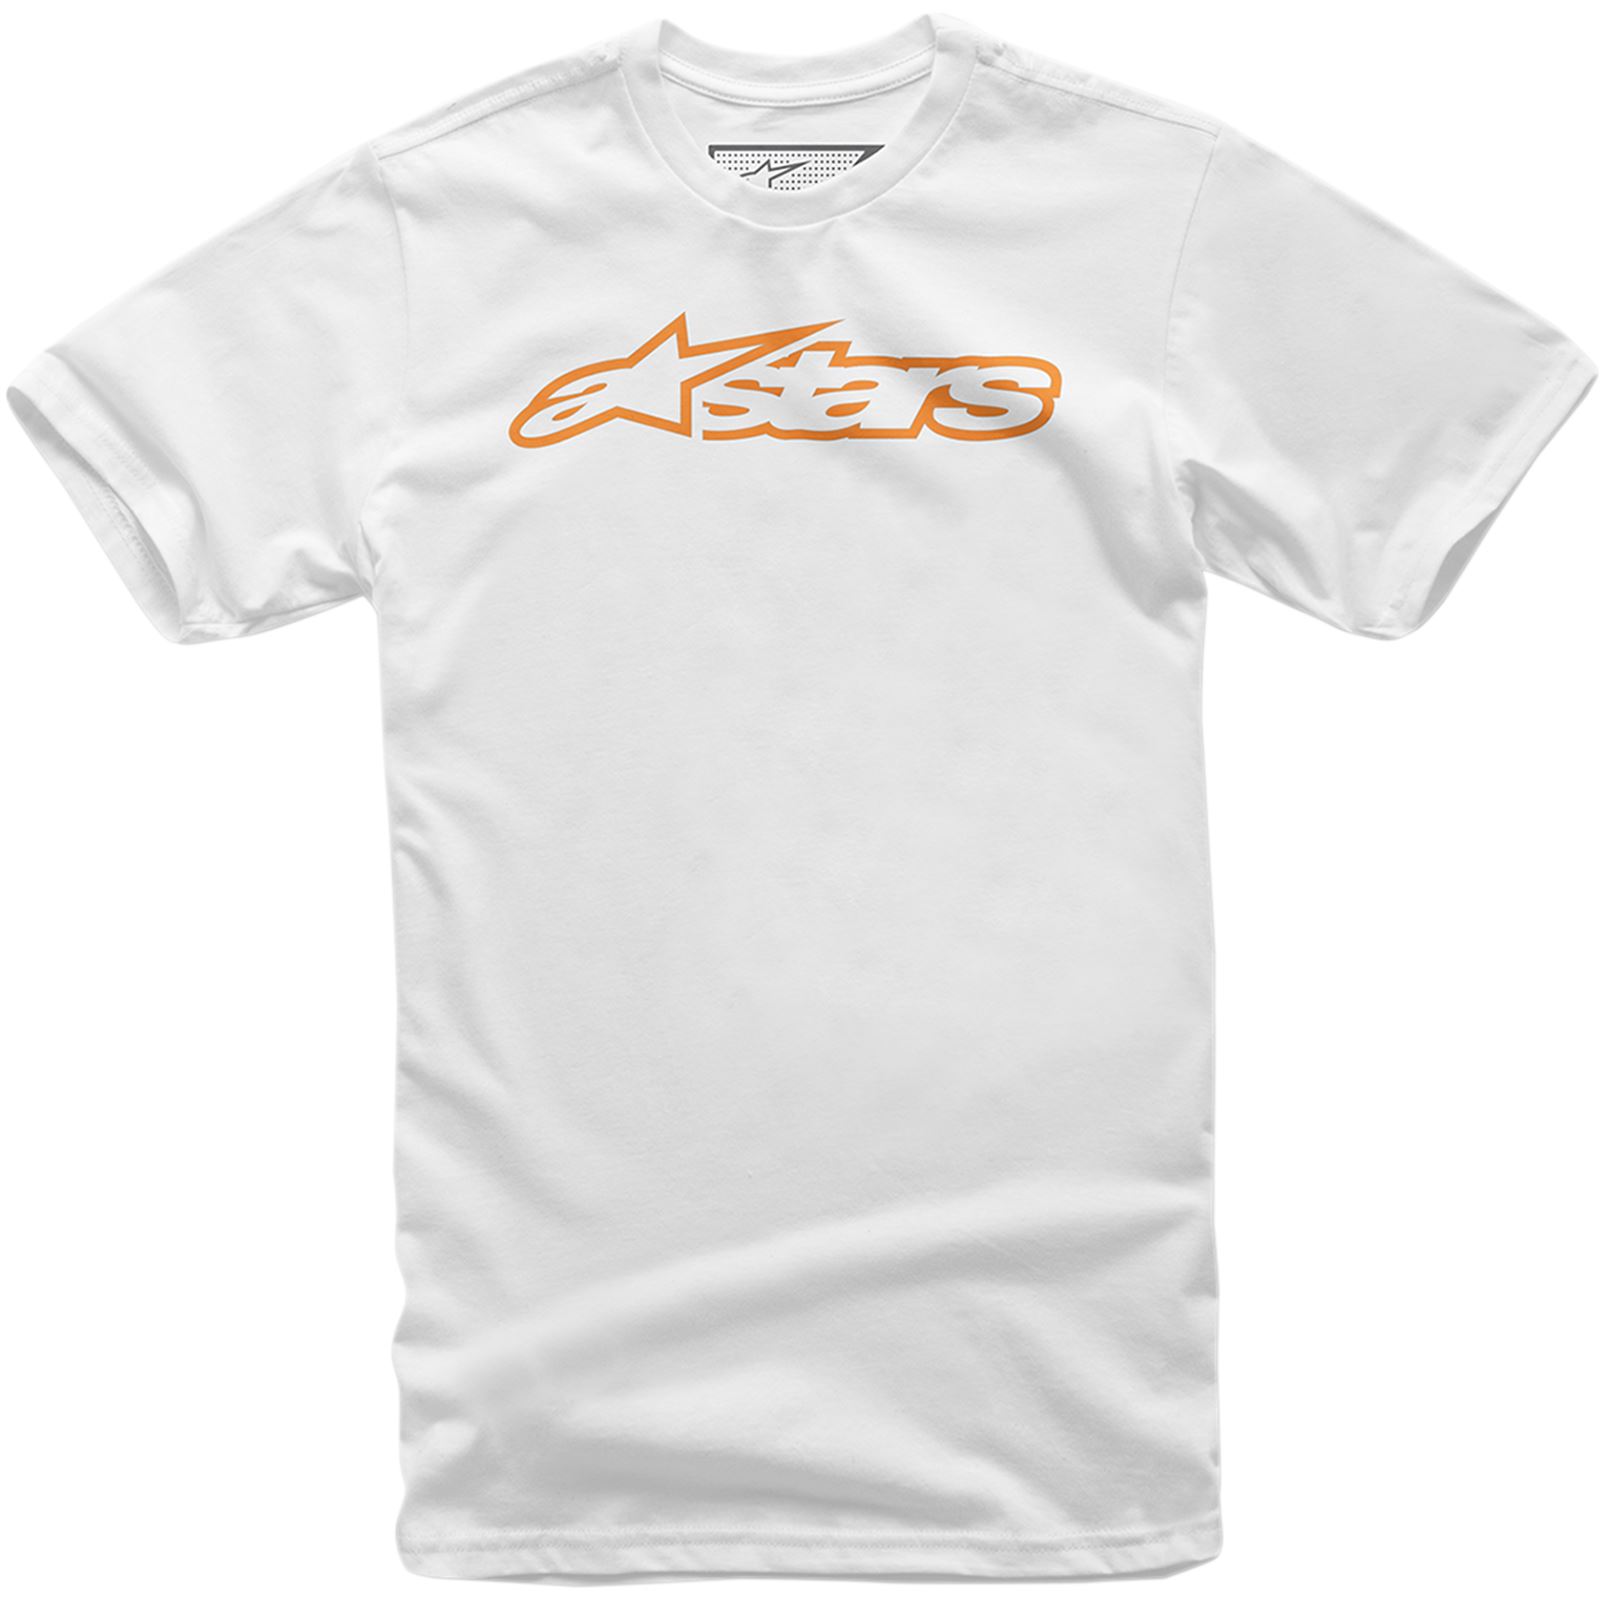 Alpinestars Youth Blaze T-Shirt - White/Orange - Small